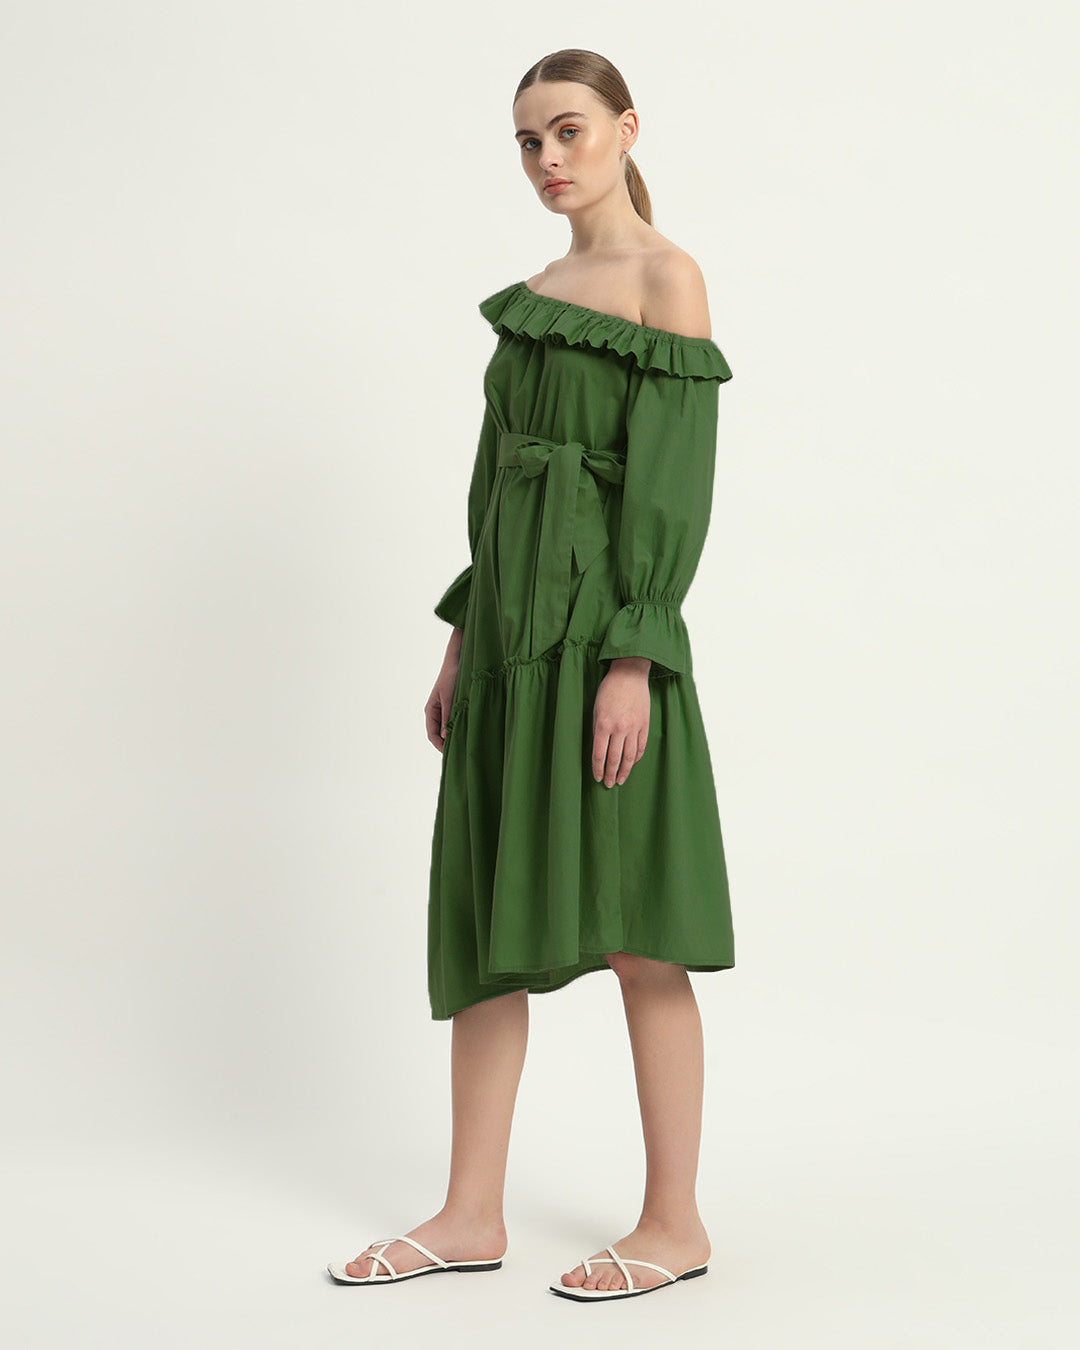 The Emerald Stellata Cotton Dress